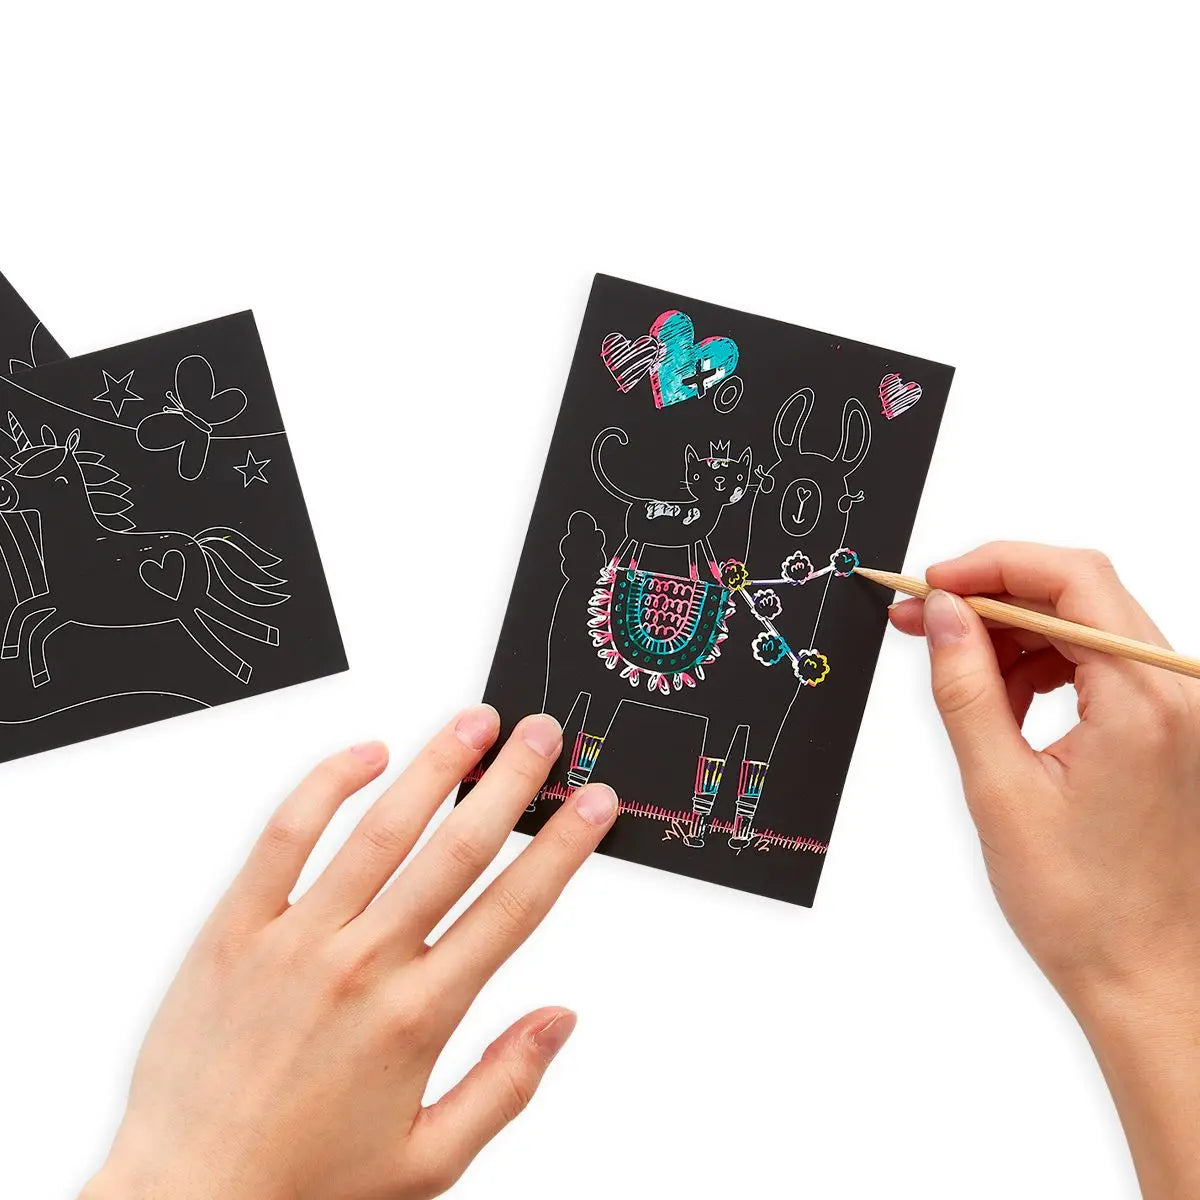 Mini Scratch & Scribble Art Kit: Funtastic Friends - Lulie